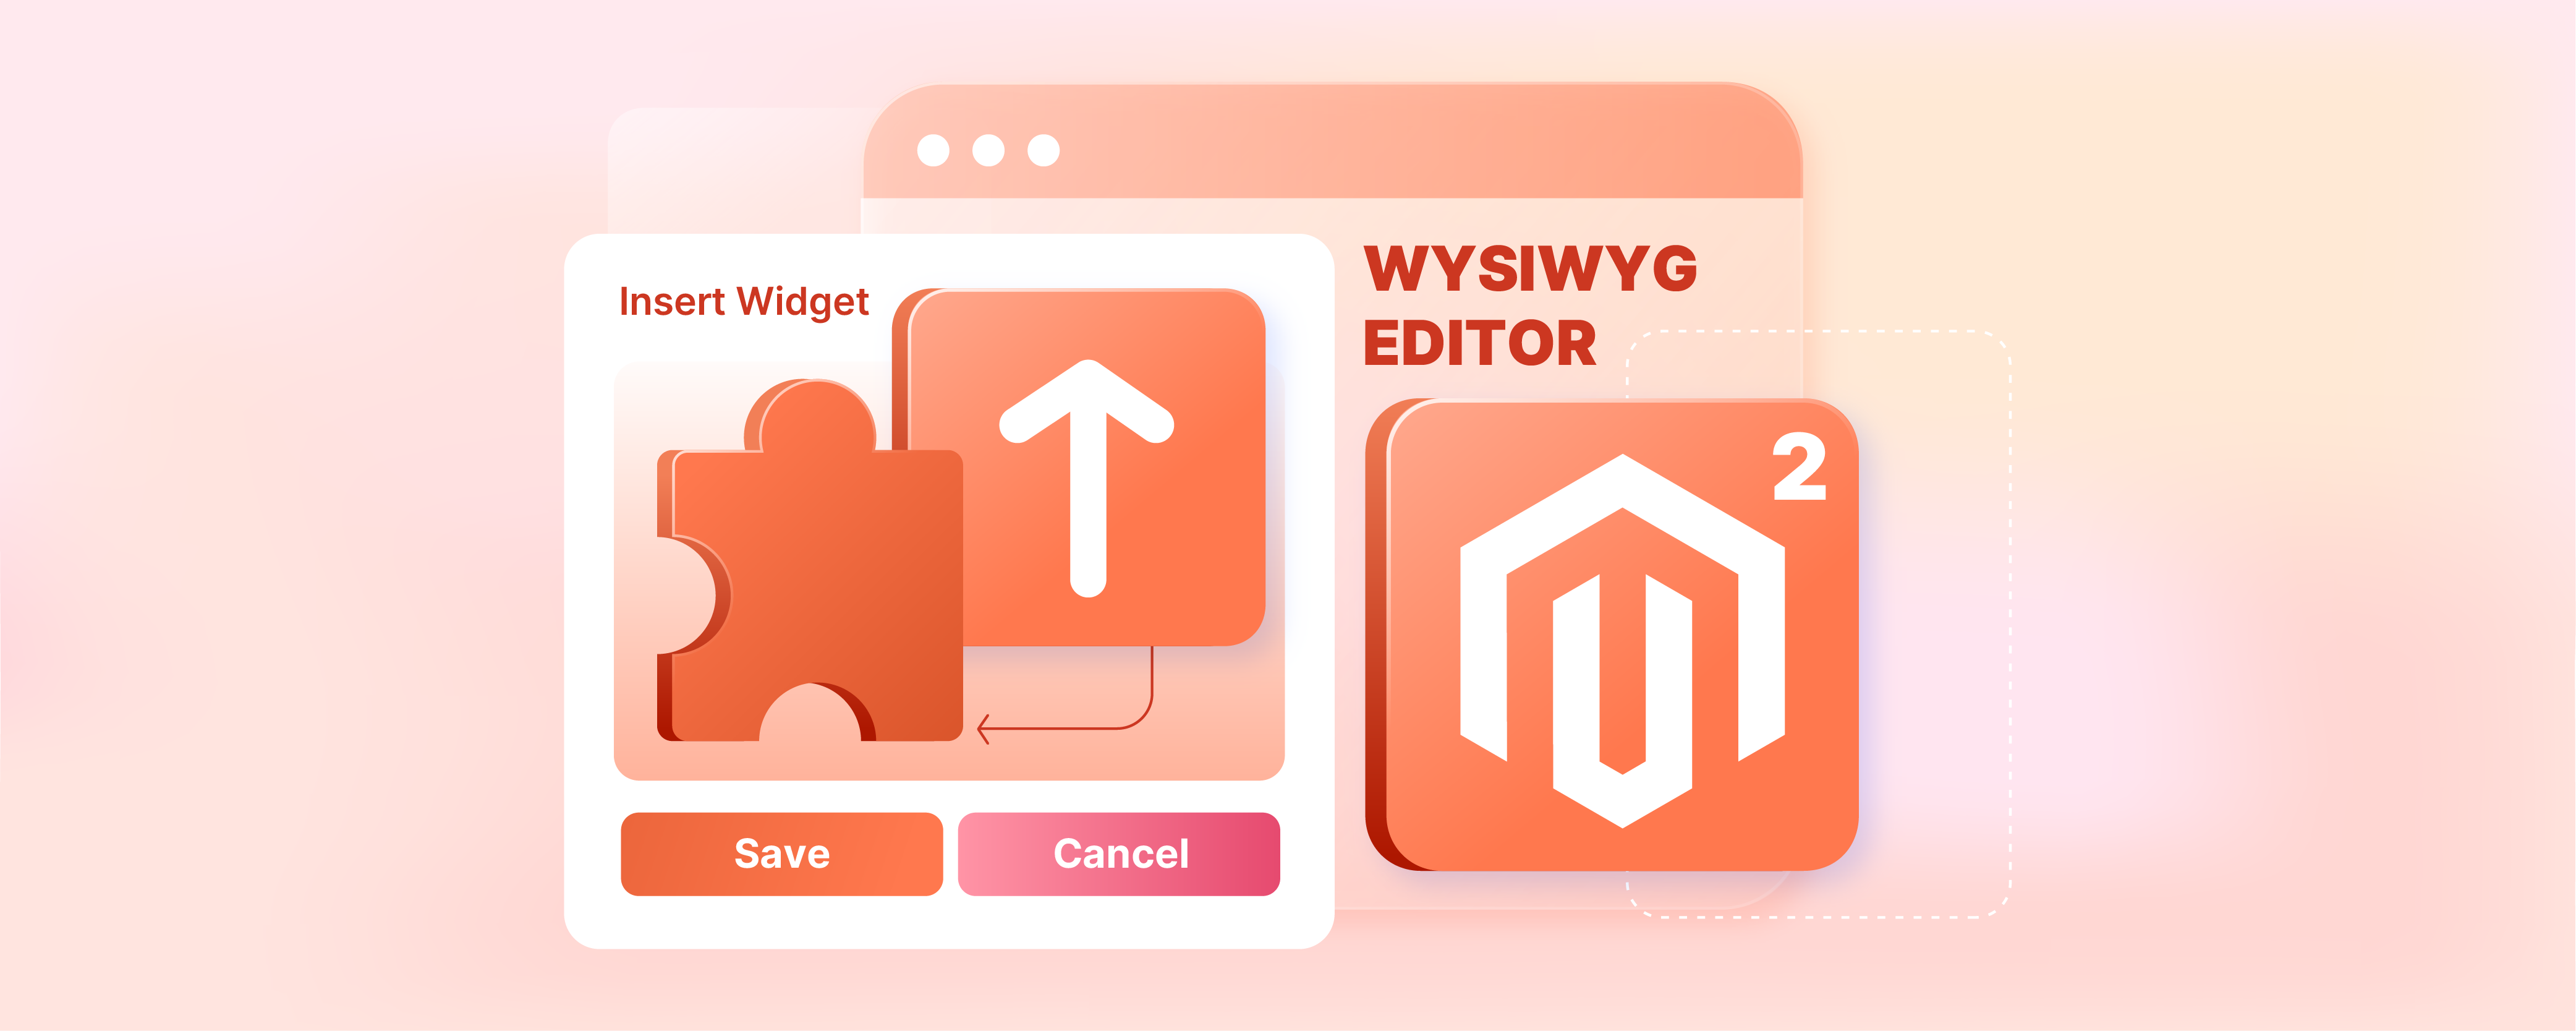 Magento 2 WYSIWYG Editor: Inserting Widget & Variable